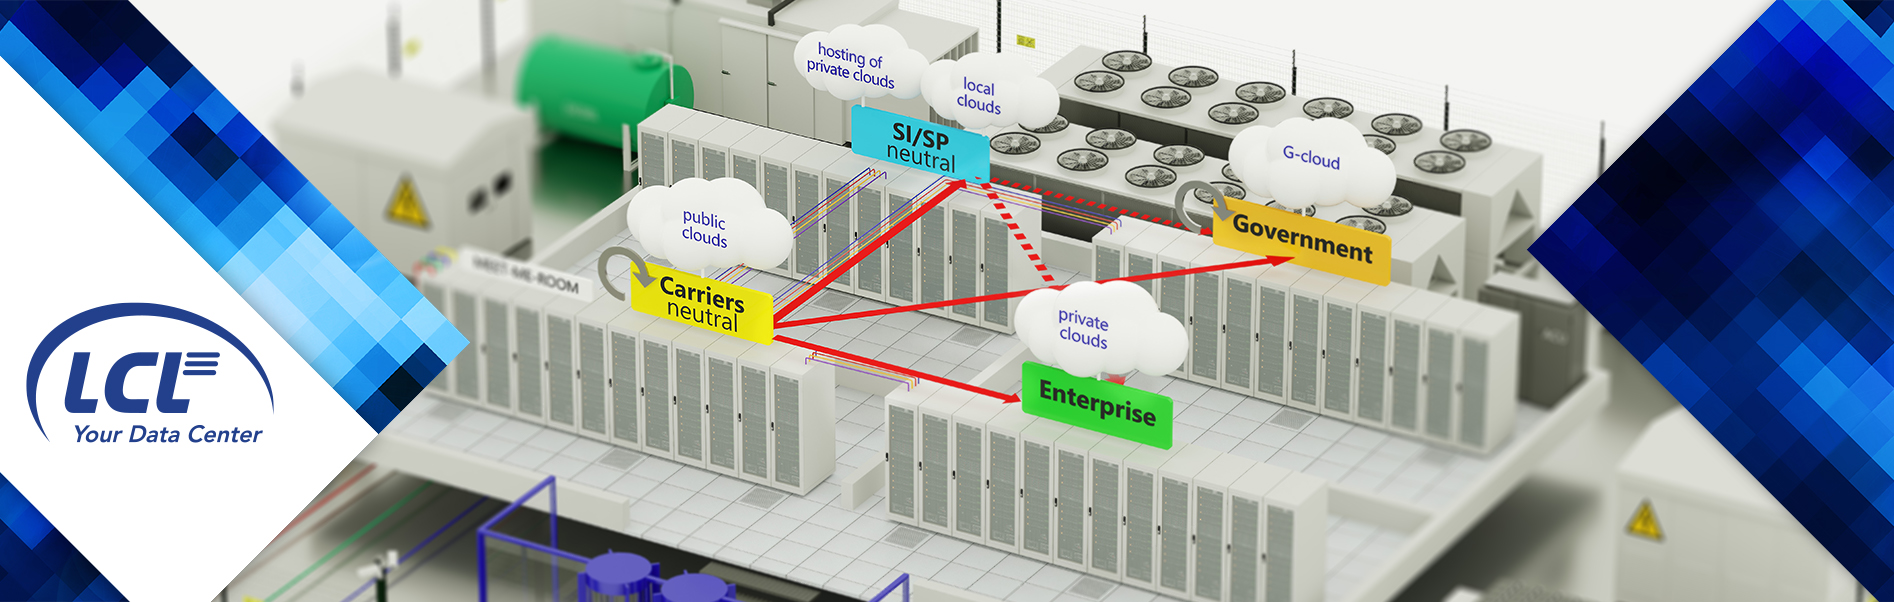 cloud connectivity bij LCL, de verschillende partners